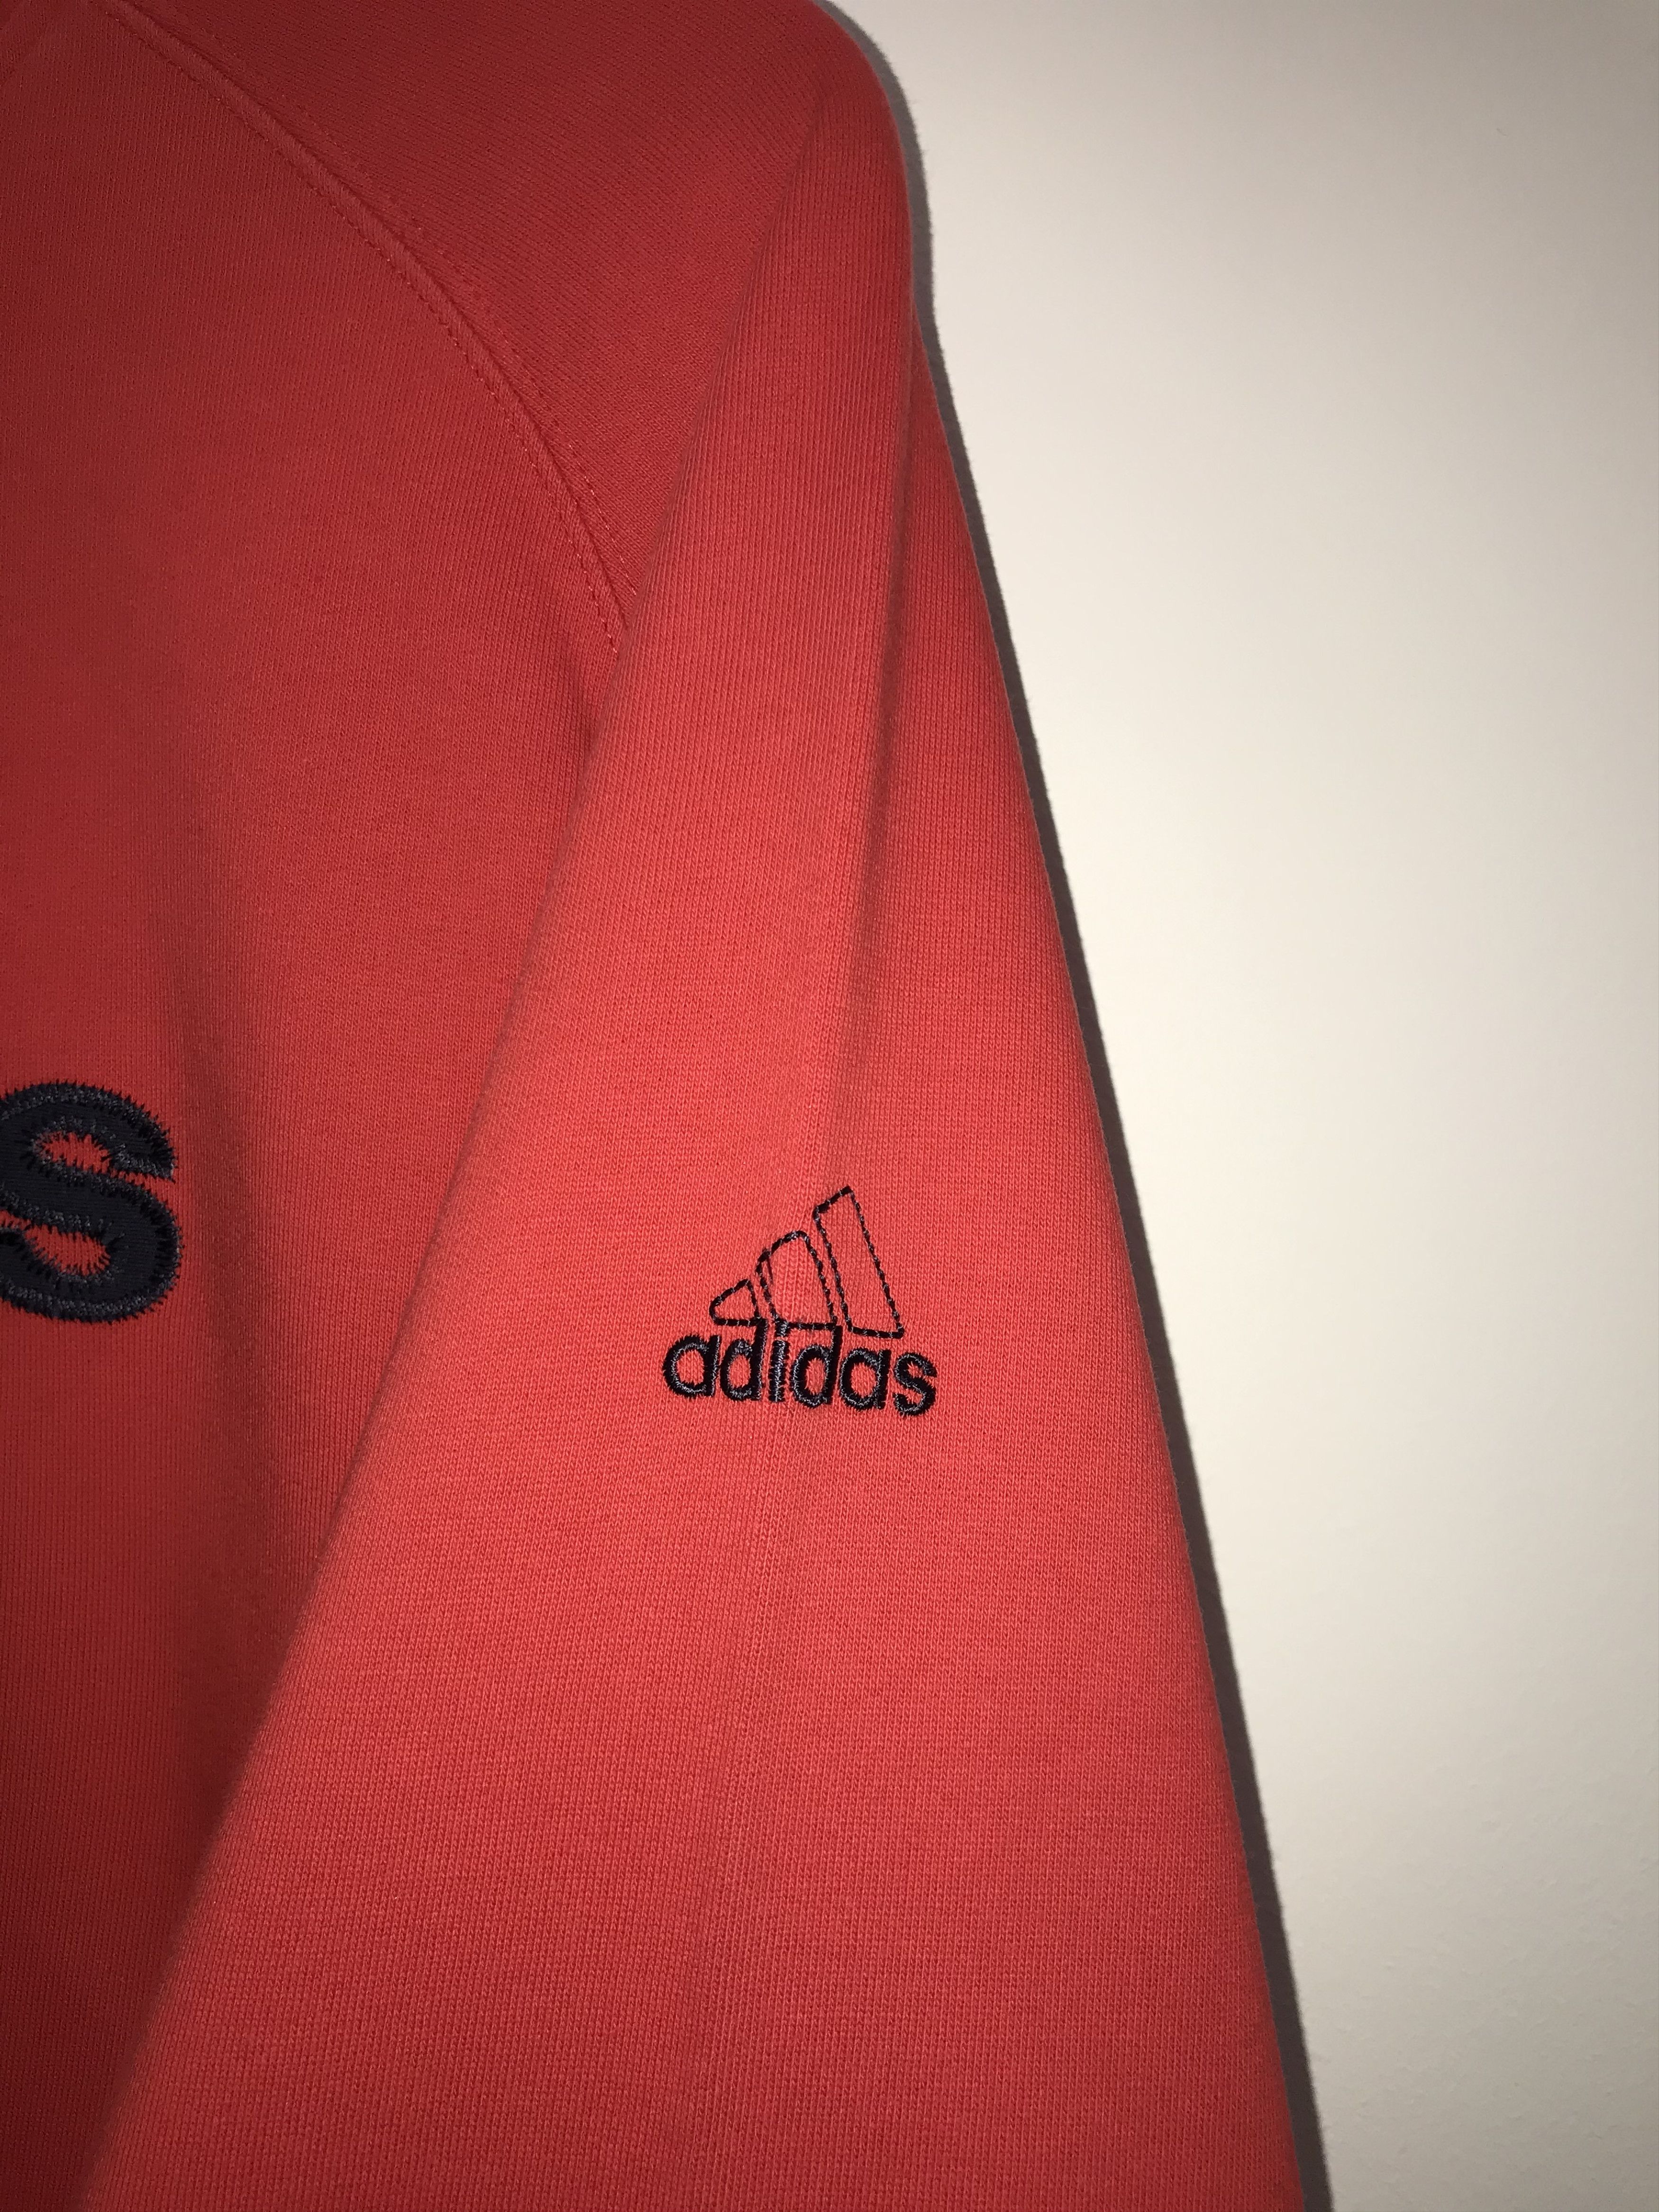 Adidas Vintage Adidas Red Sweatshirt Originals Equipment 00s Size US L / EU 52-54 / 3 - 8 Preview